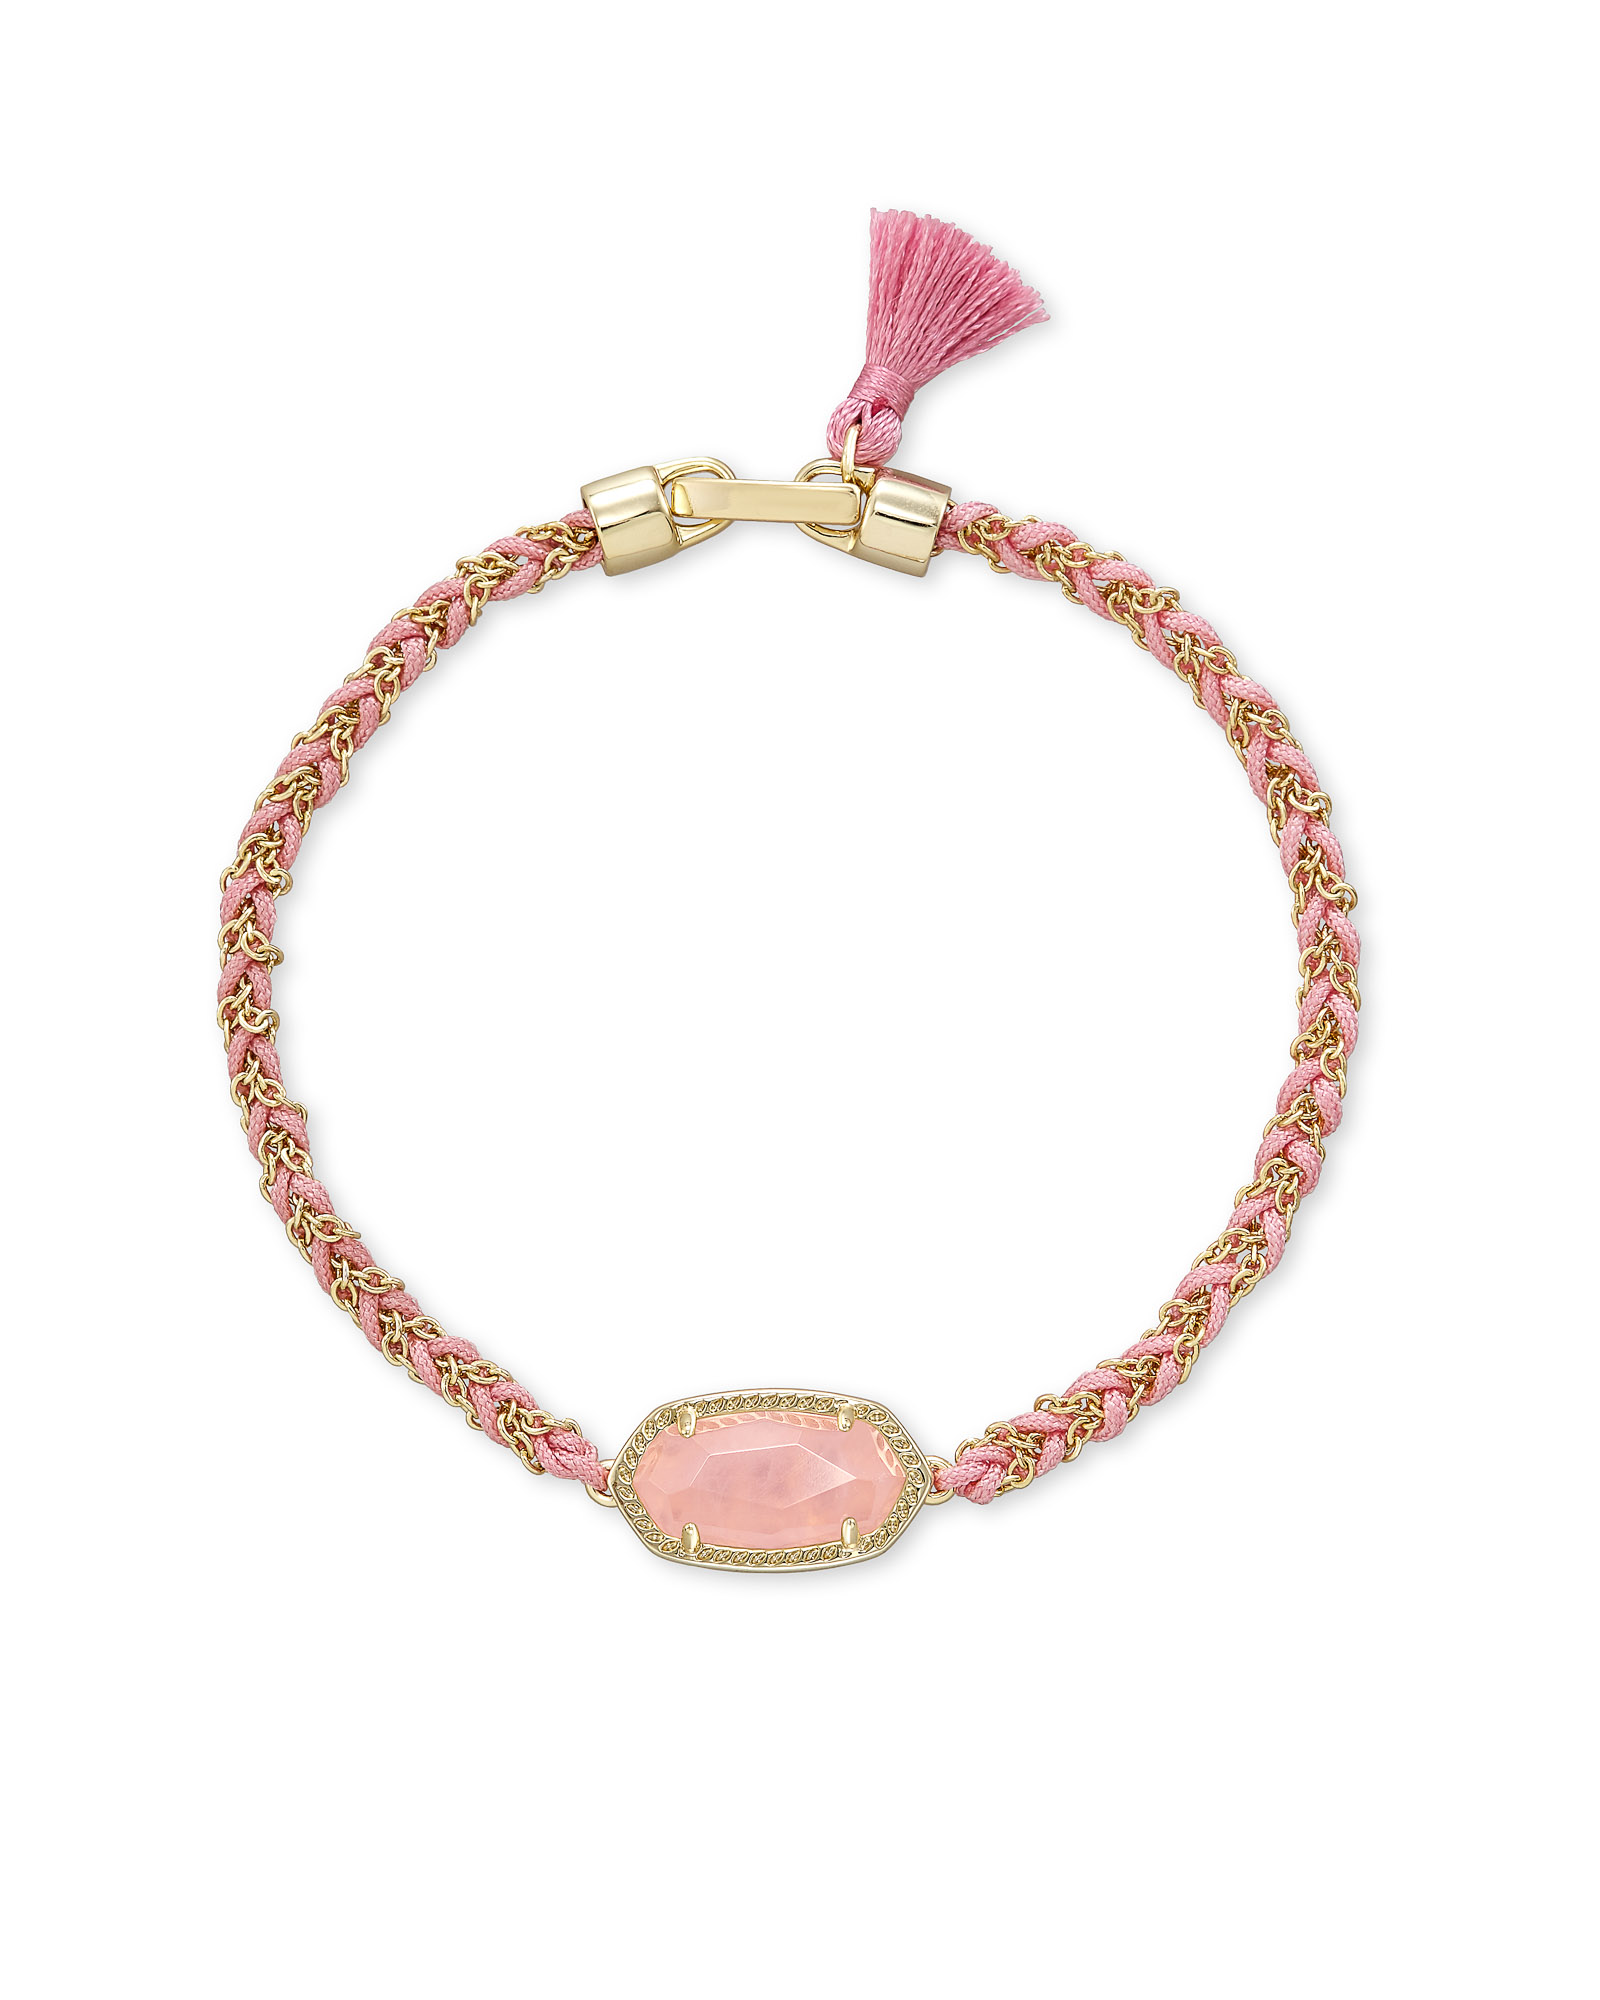 Elaina Gold Friendship Bracelet in Rose Quartz | Kendra Scott